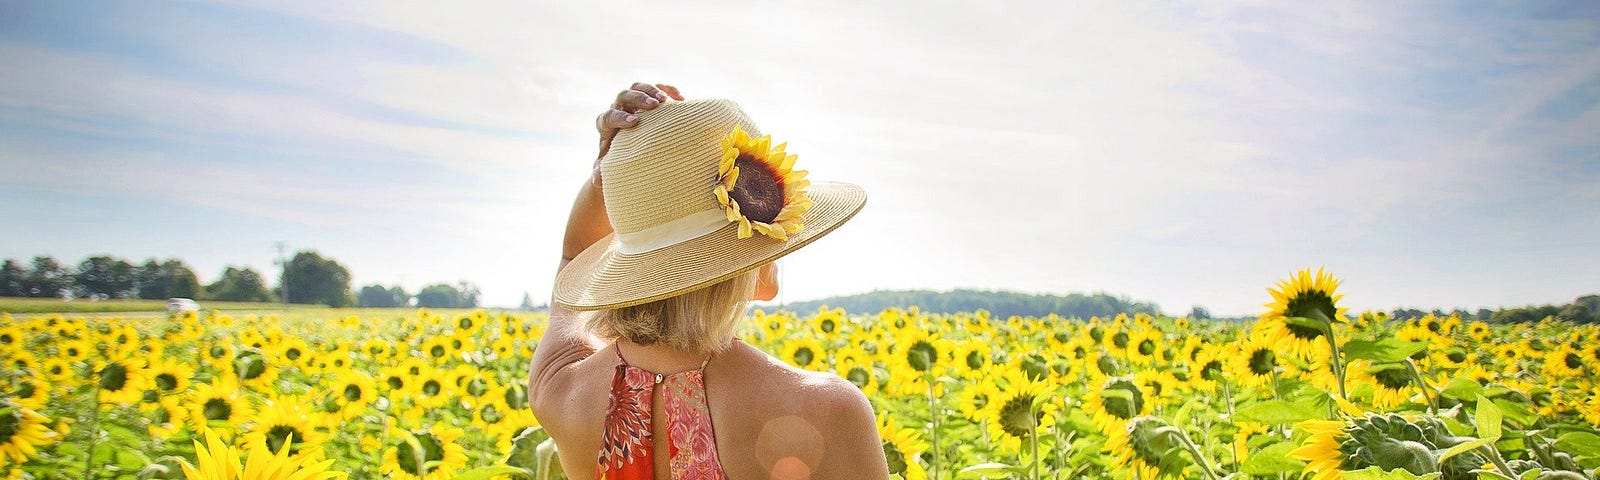 A girl standing in a sunflower field.